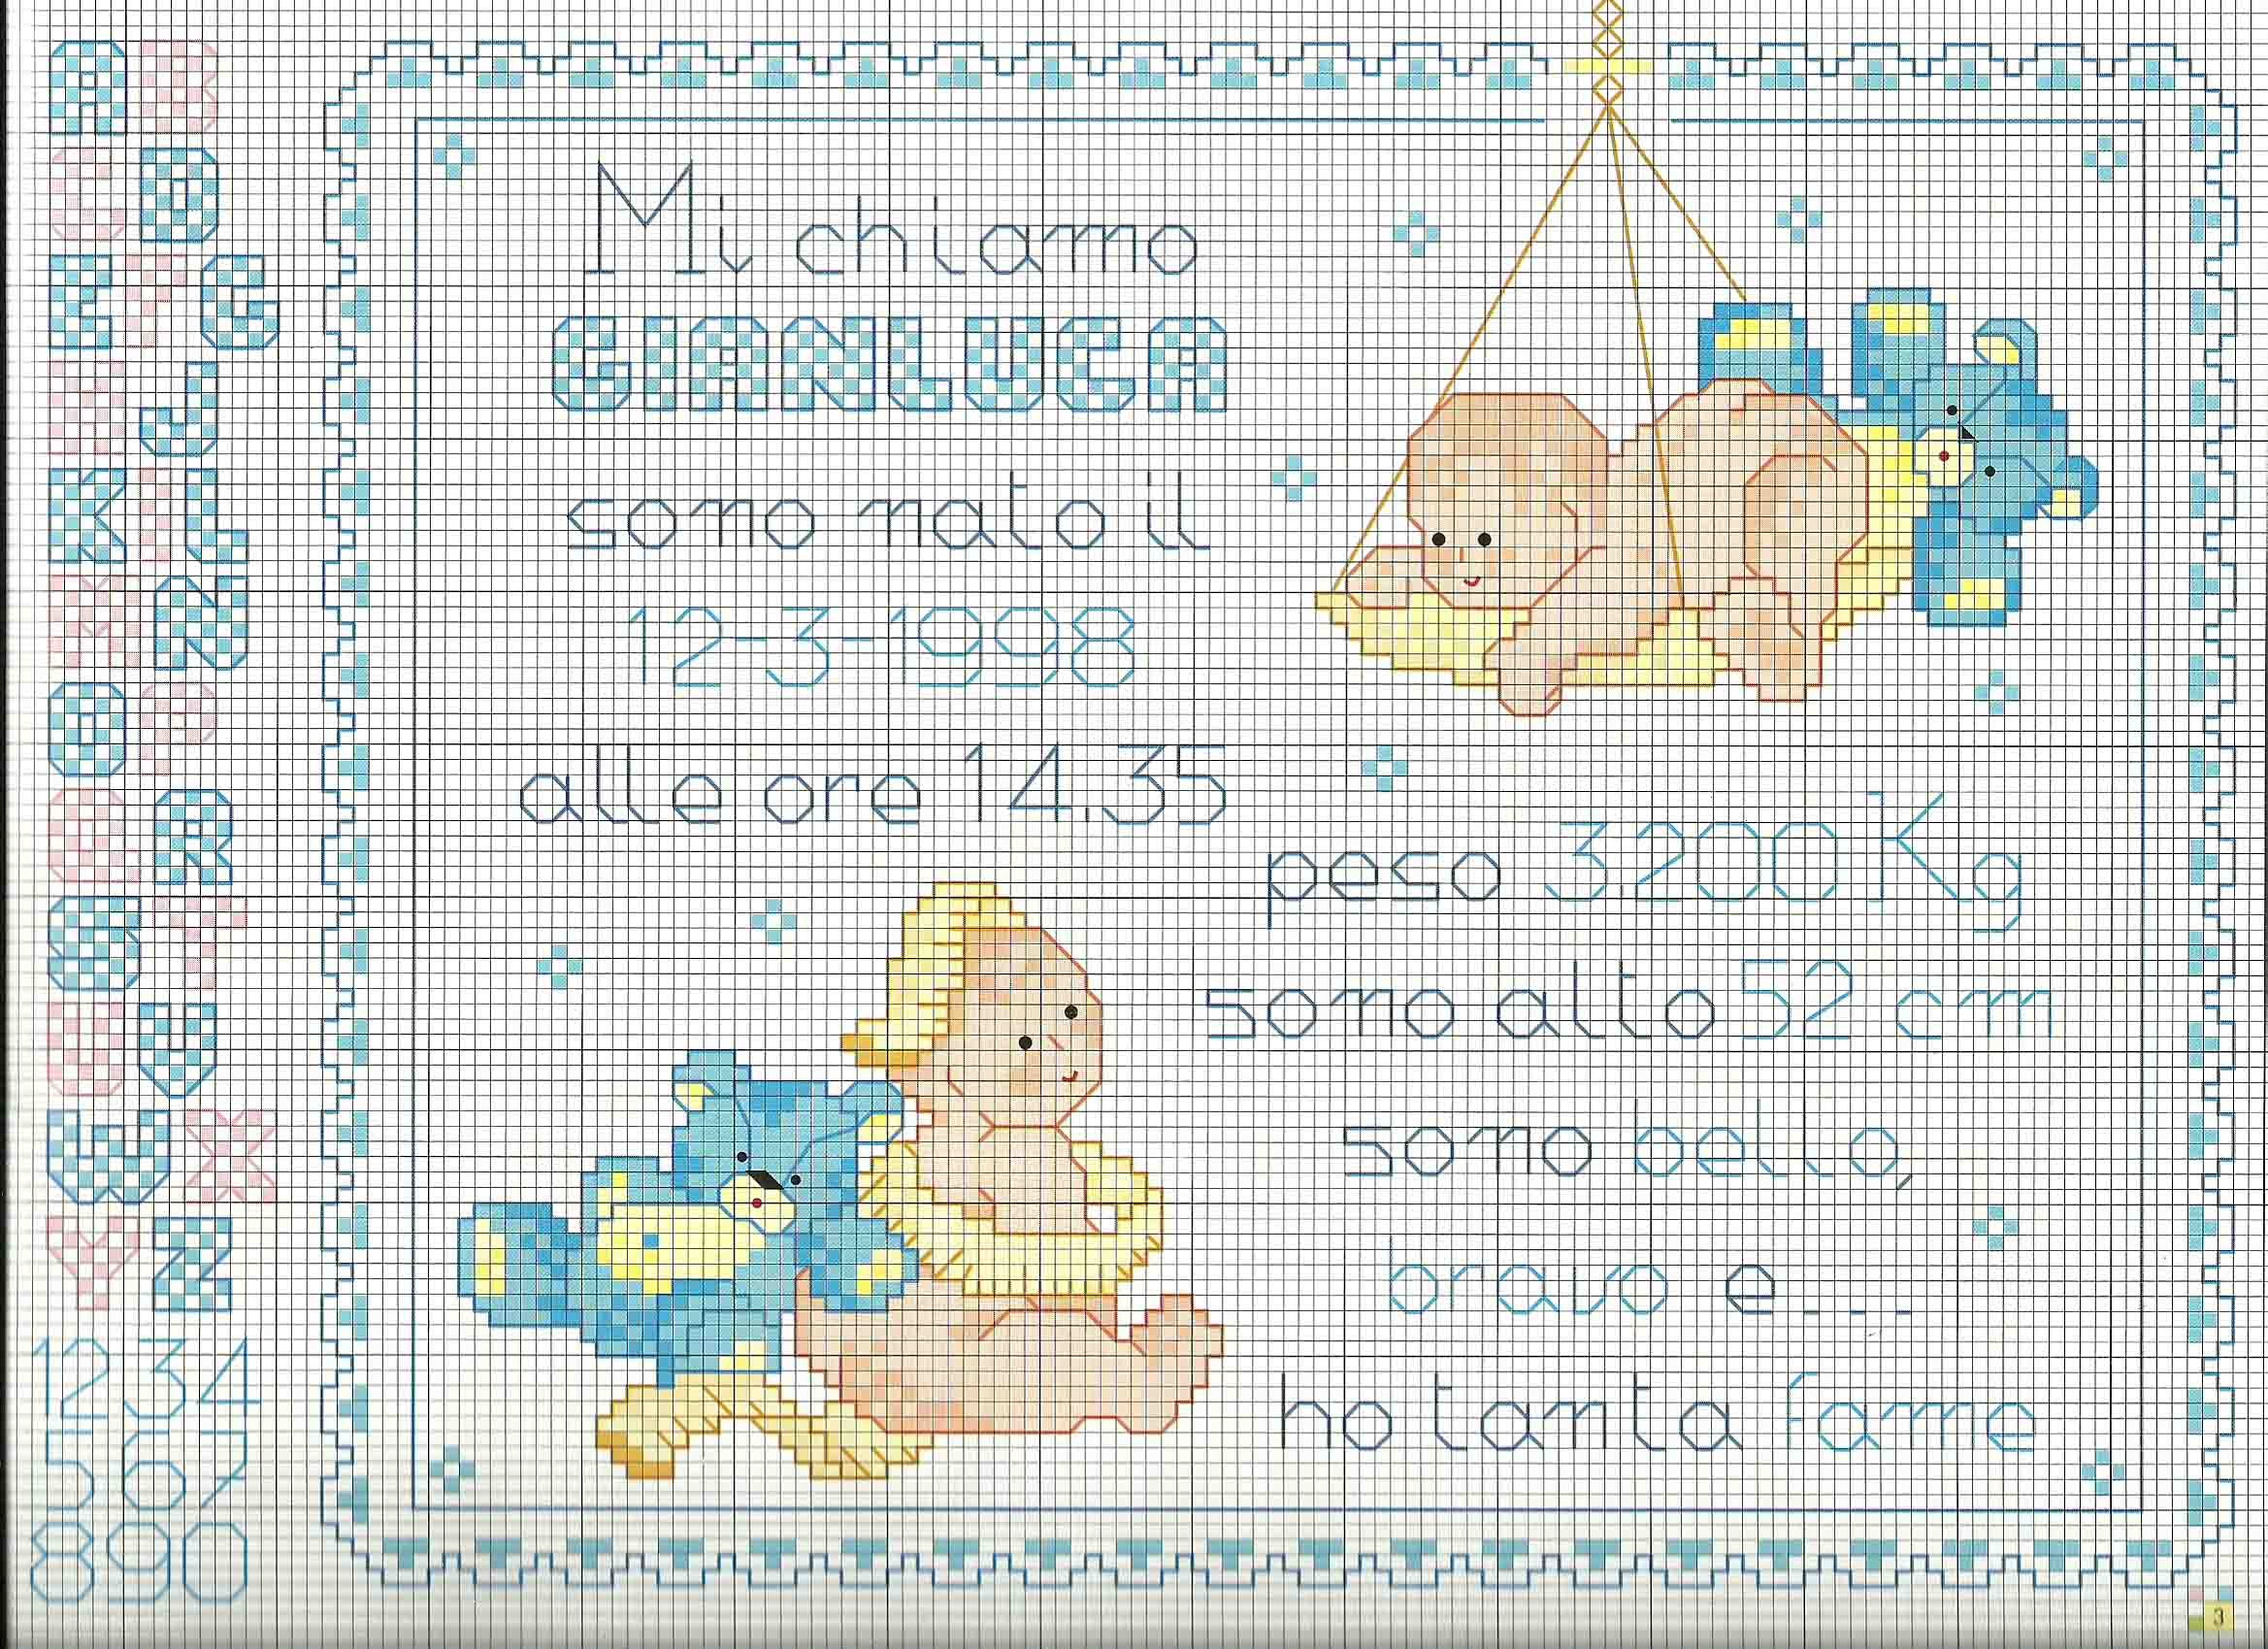 Cross stitch baby birth record with blue teddy bears